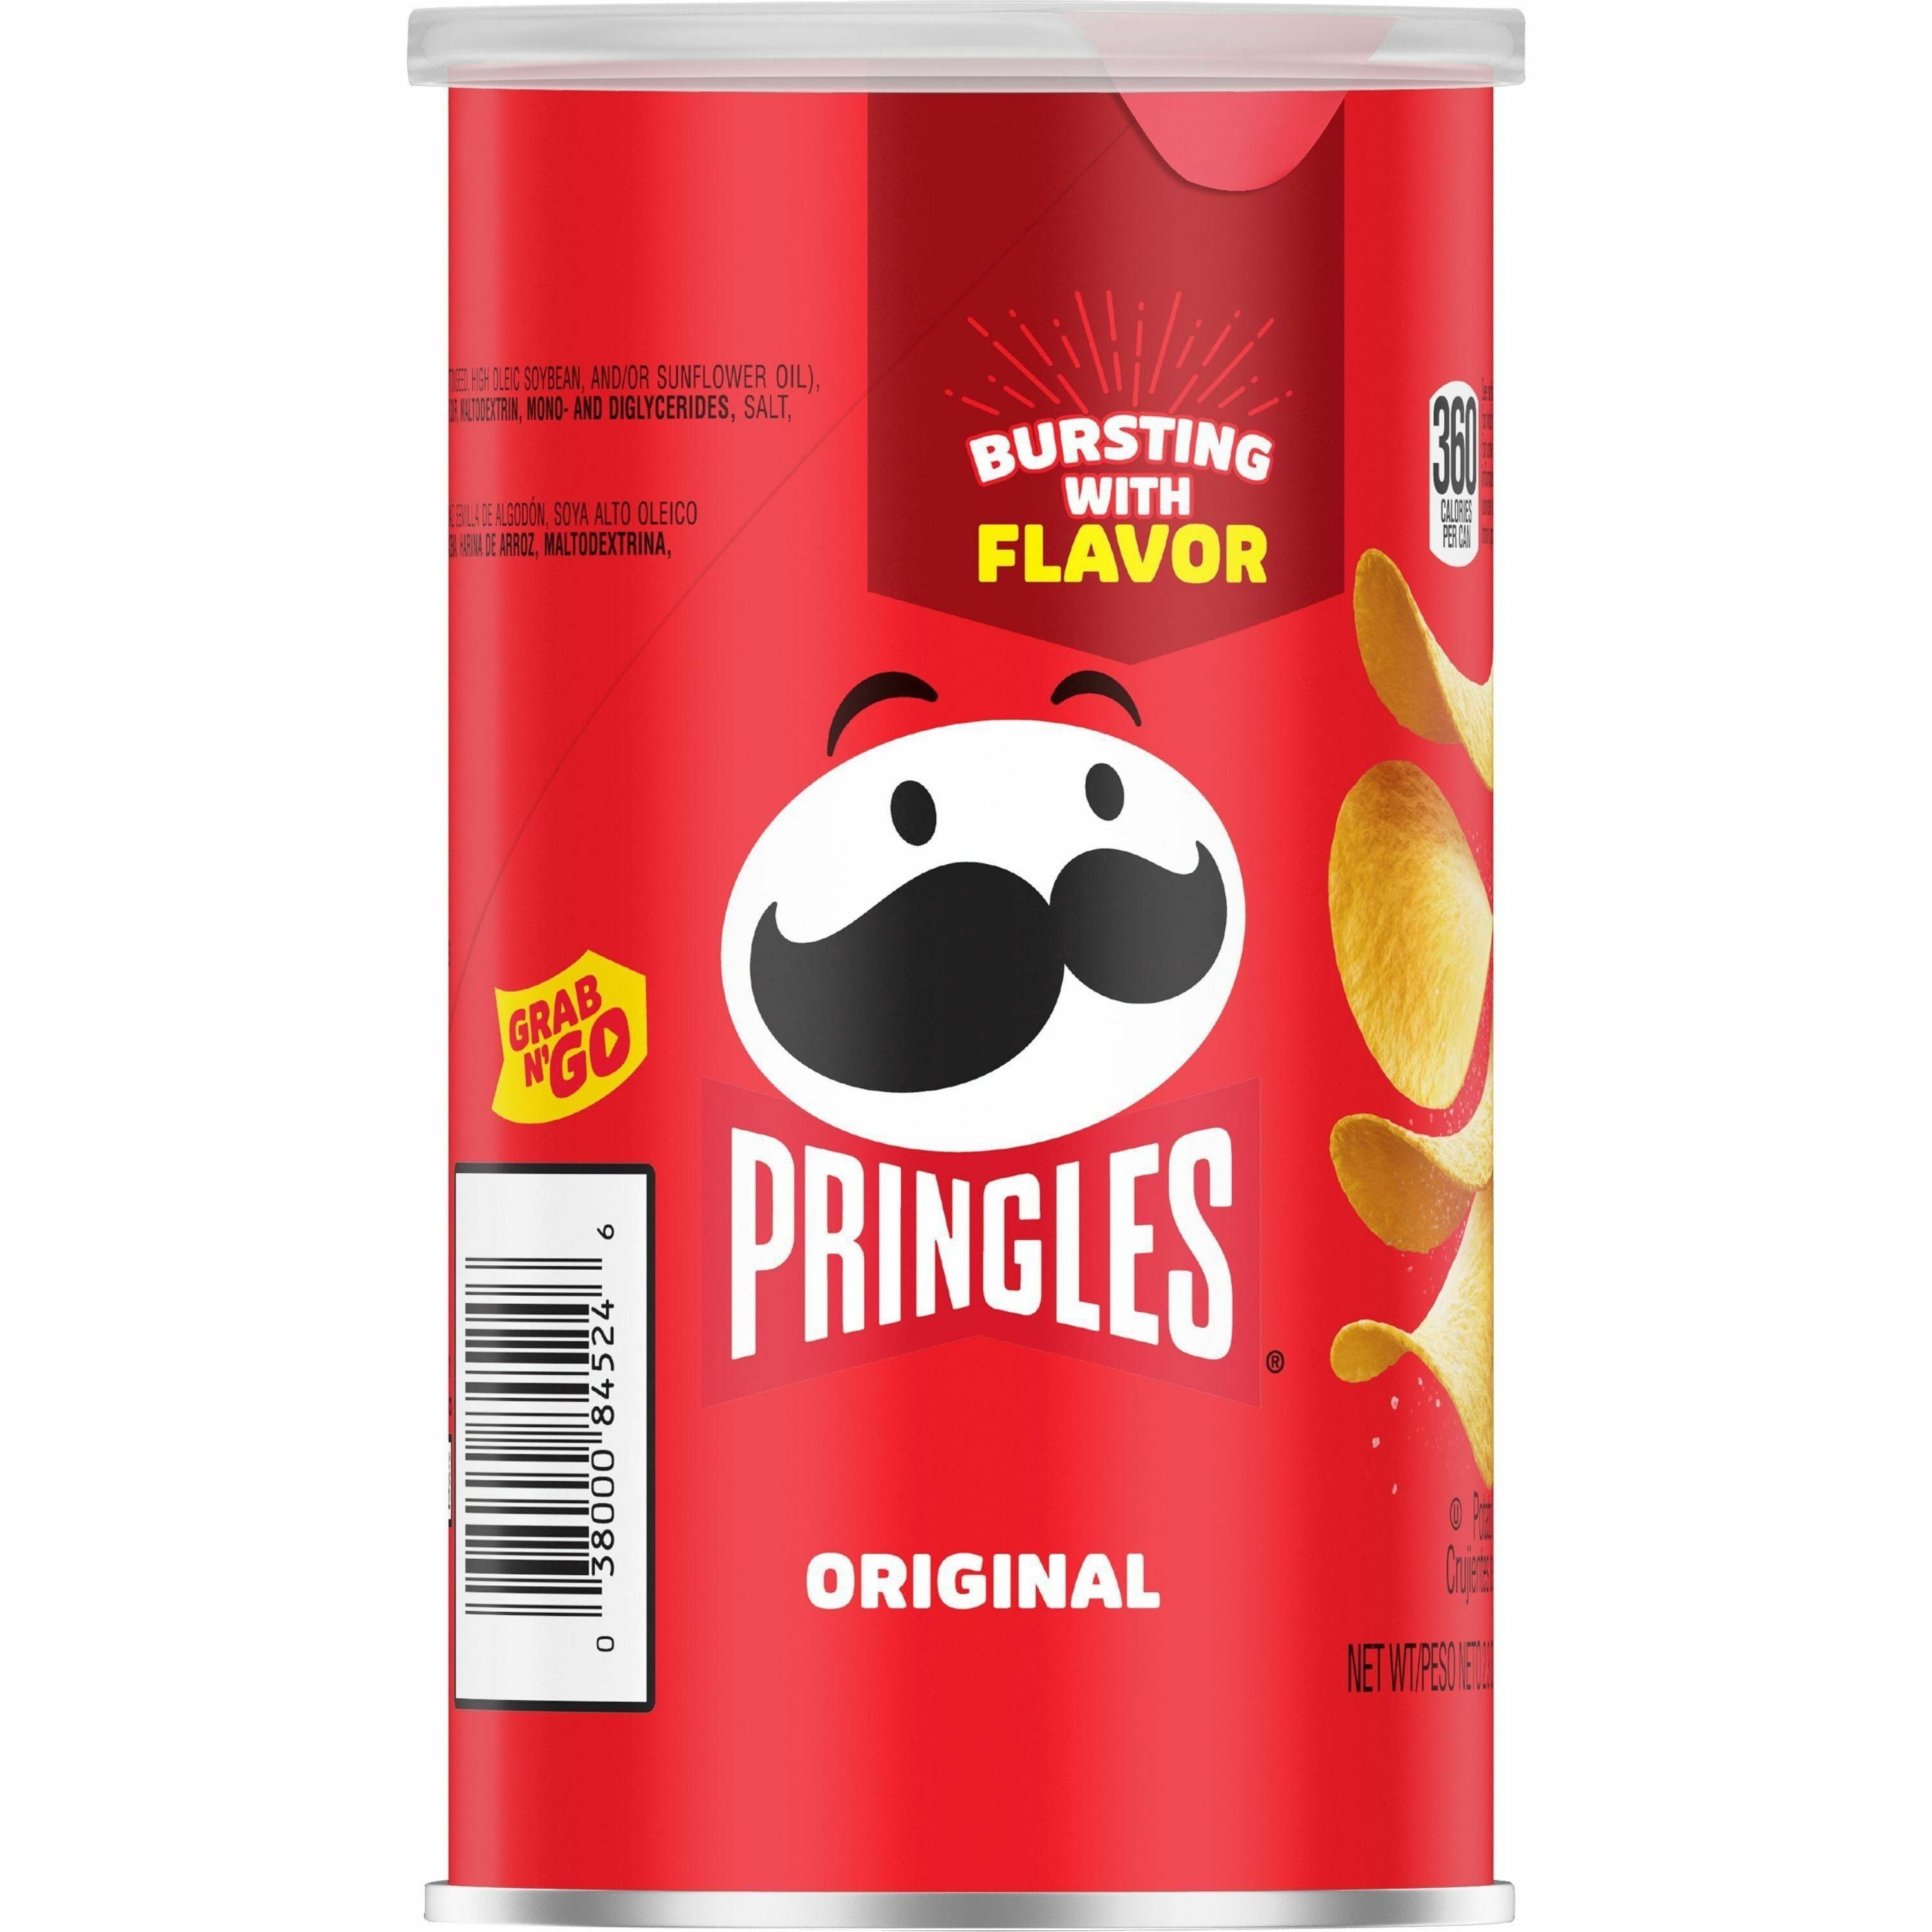 pringles-original-original-can-1-serving-can-238-oz-12-carton_keb84563 - 2